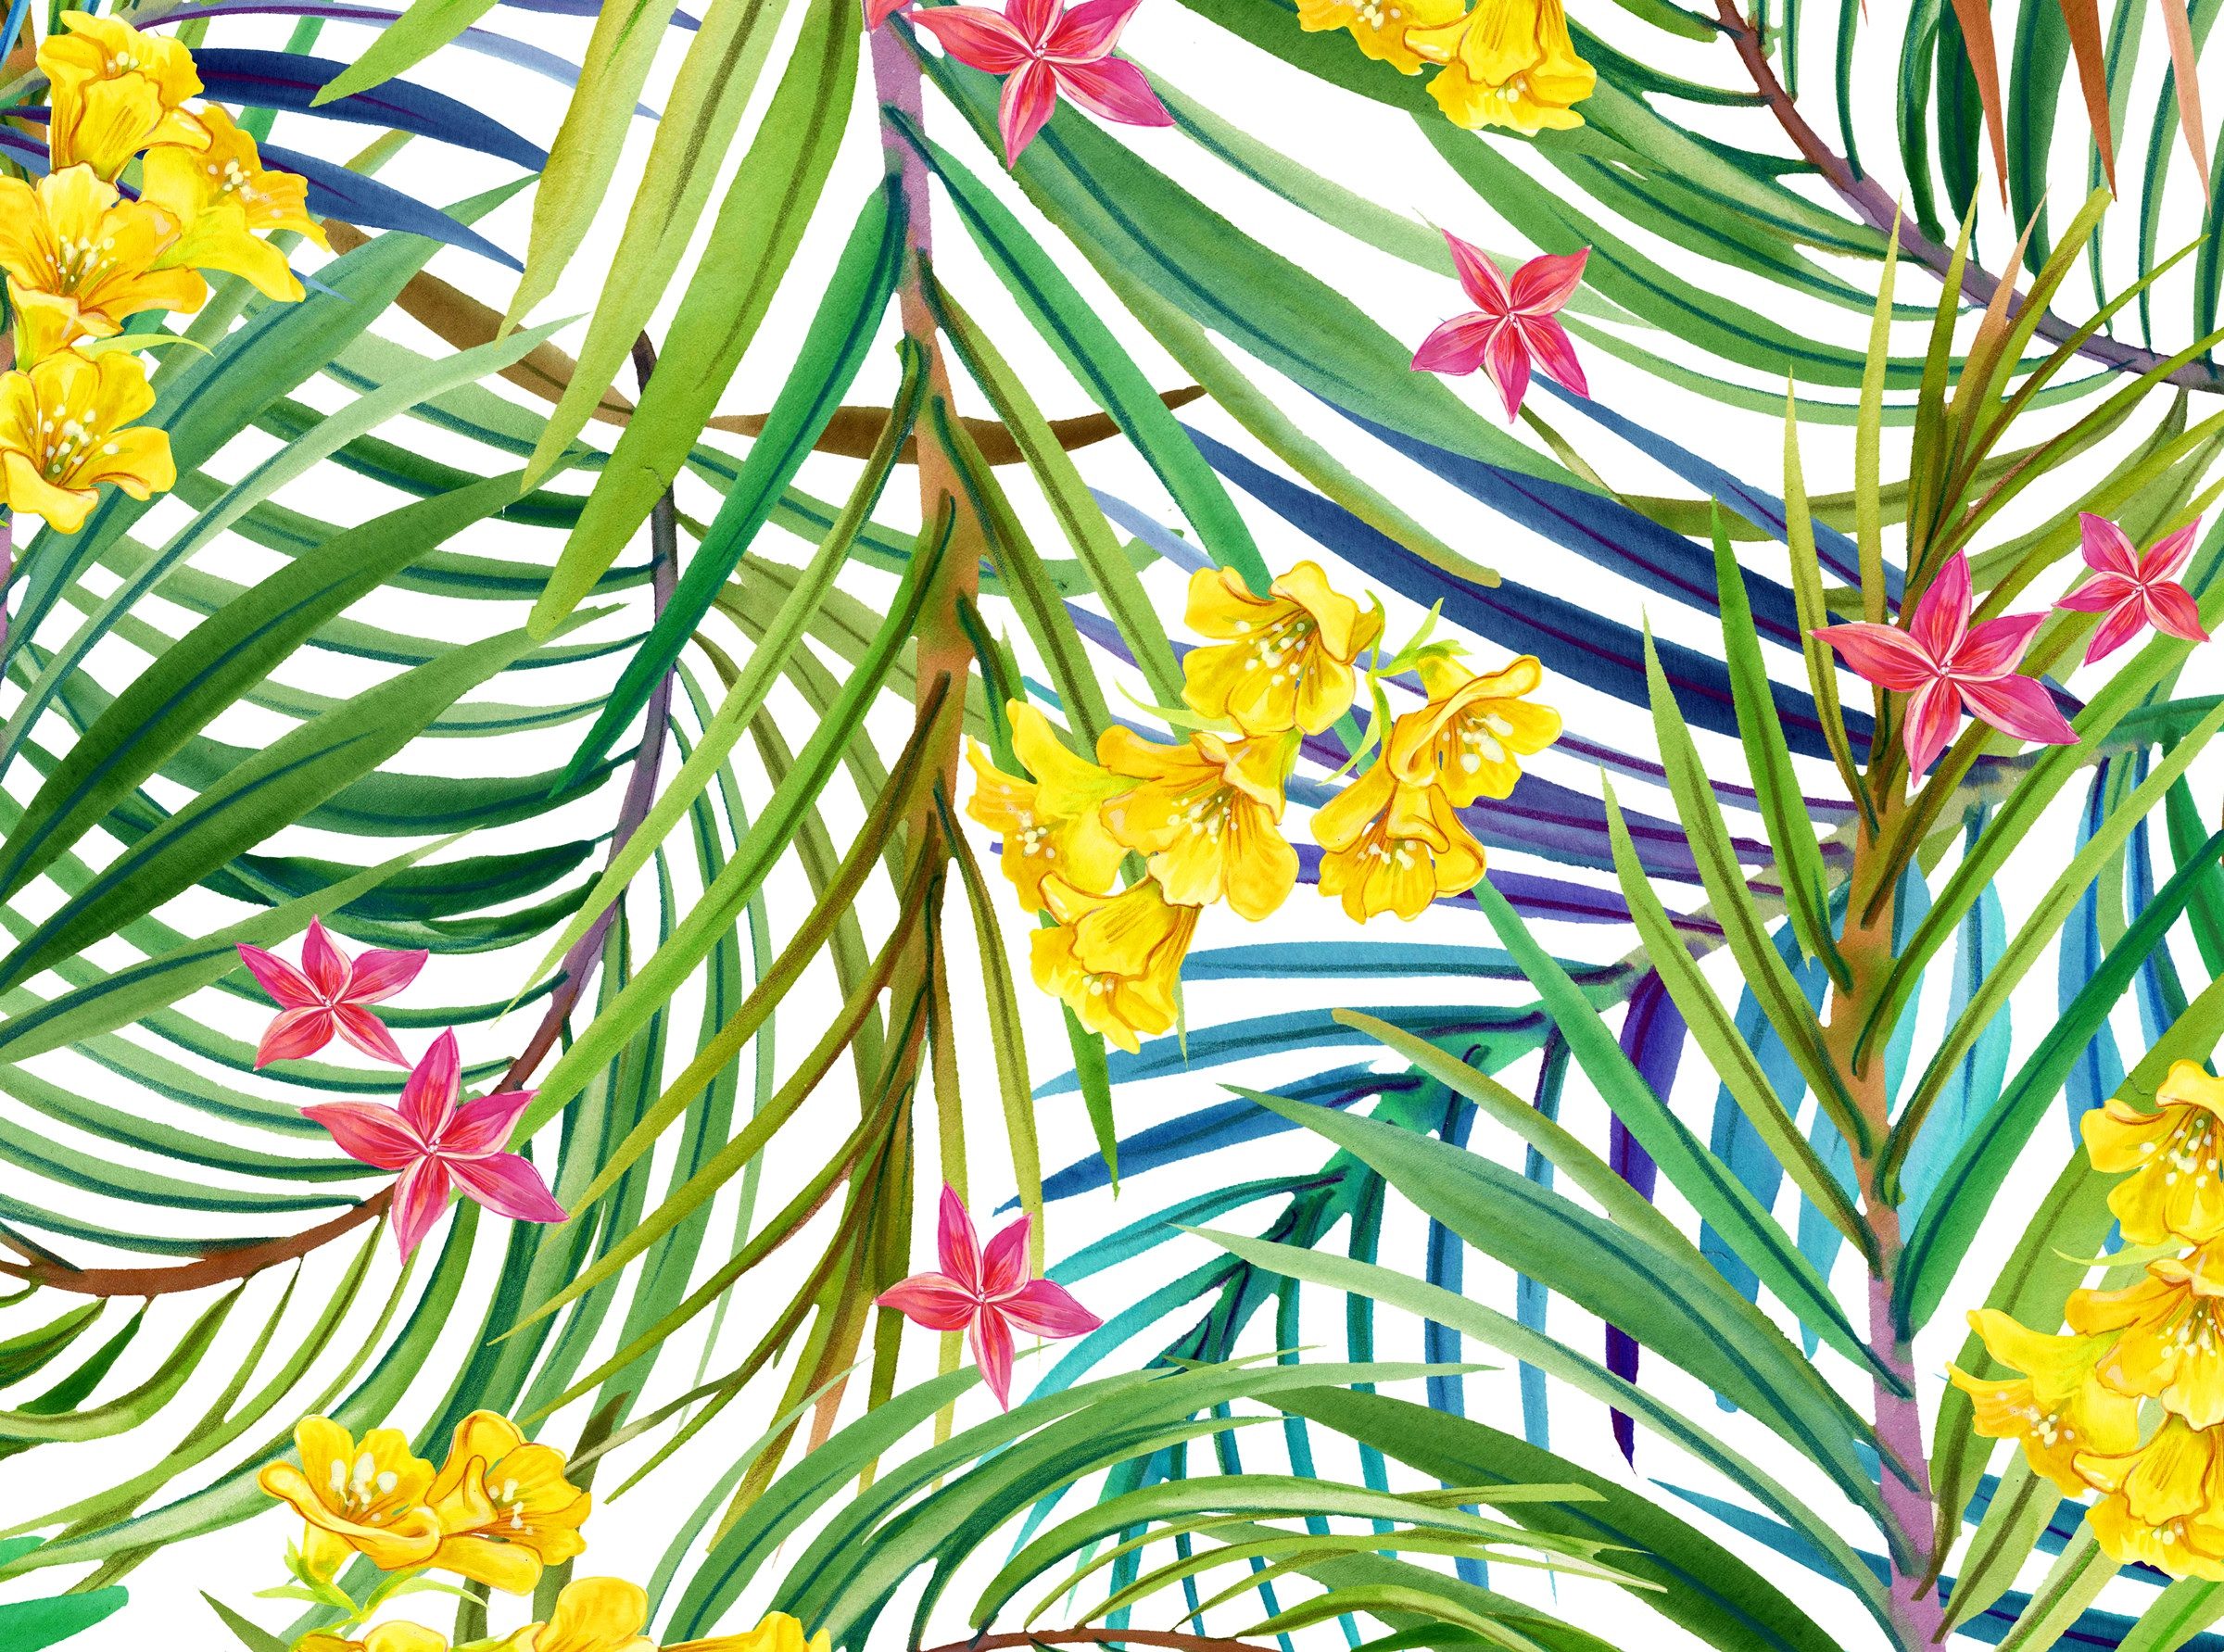 Papermoon Fototapete VLIES-Tapete Premium Blumen Natur Gelb Rosa Blau Lila Grün, Kleister KOSTENLOS, reduziert, 3D-Effekt, restlos trocken abziehbar, (komplett Set inkl. Tapetenkleister, 9010), Wandtapete Bild Dekoration Wand-Dekor Motiv Tapete Poster